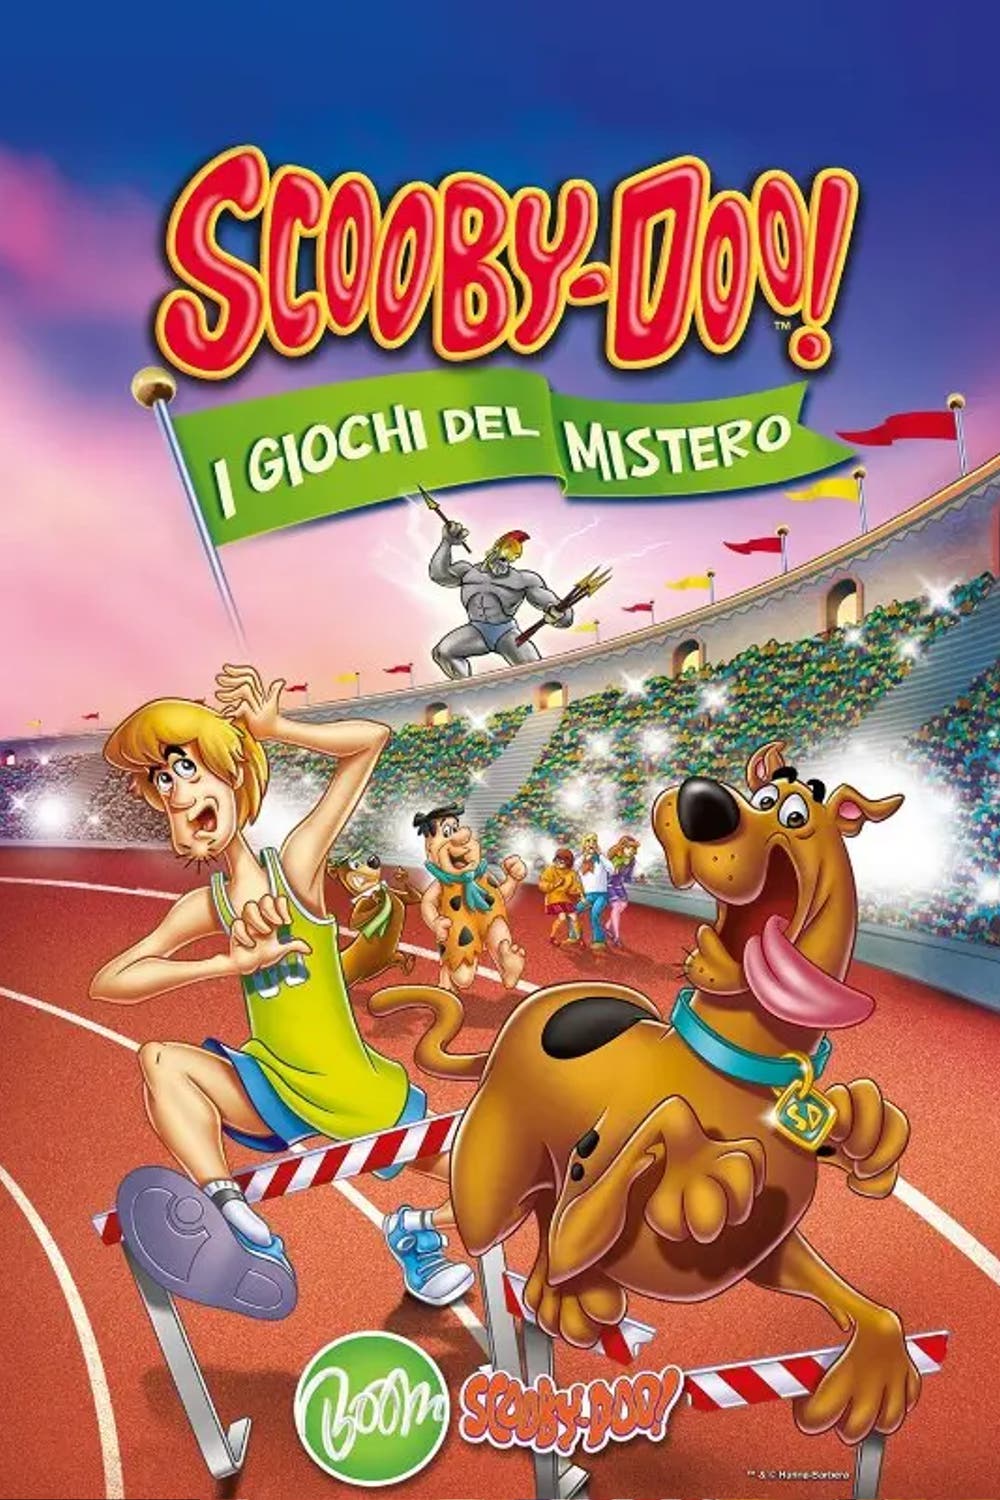 Scooby-Doo! I giochi del mistero (2012)